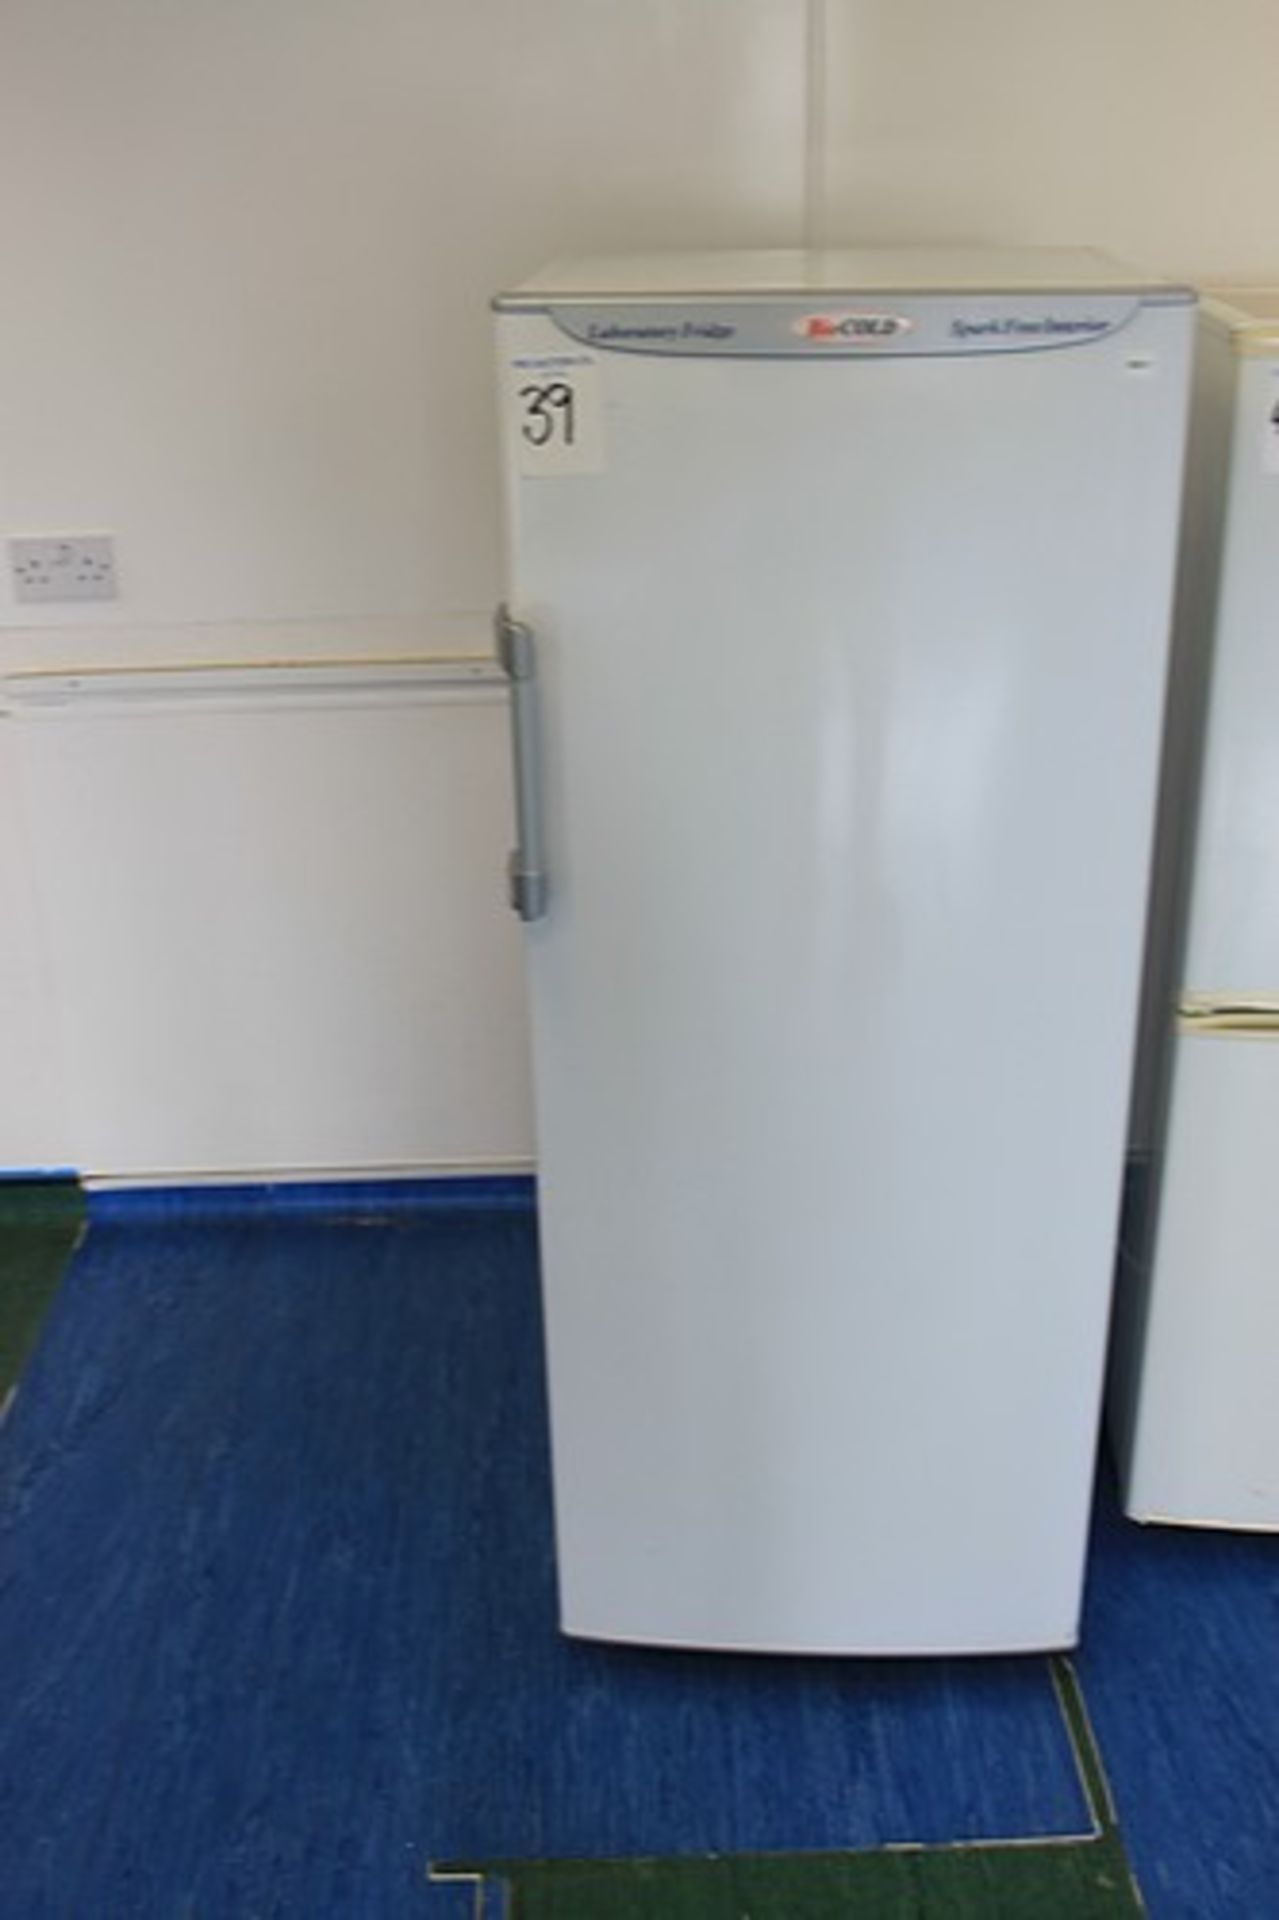 Biocold Standard Refrigerator Upright Spark free interior +2 to +8C 290L (s/n 210230133)